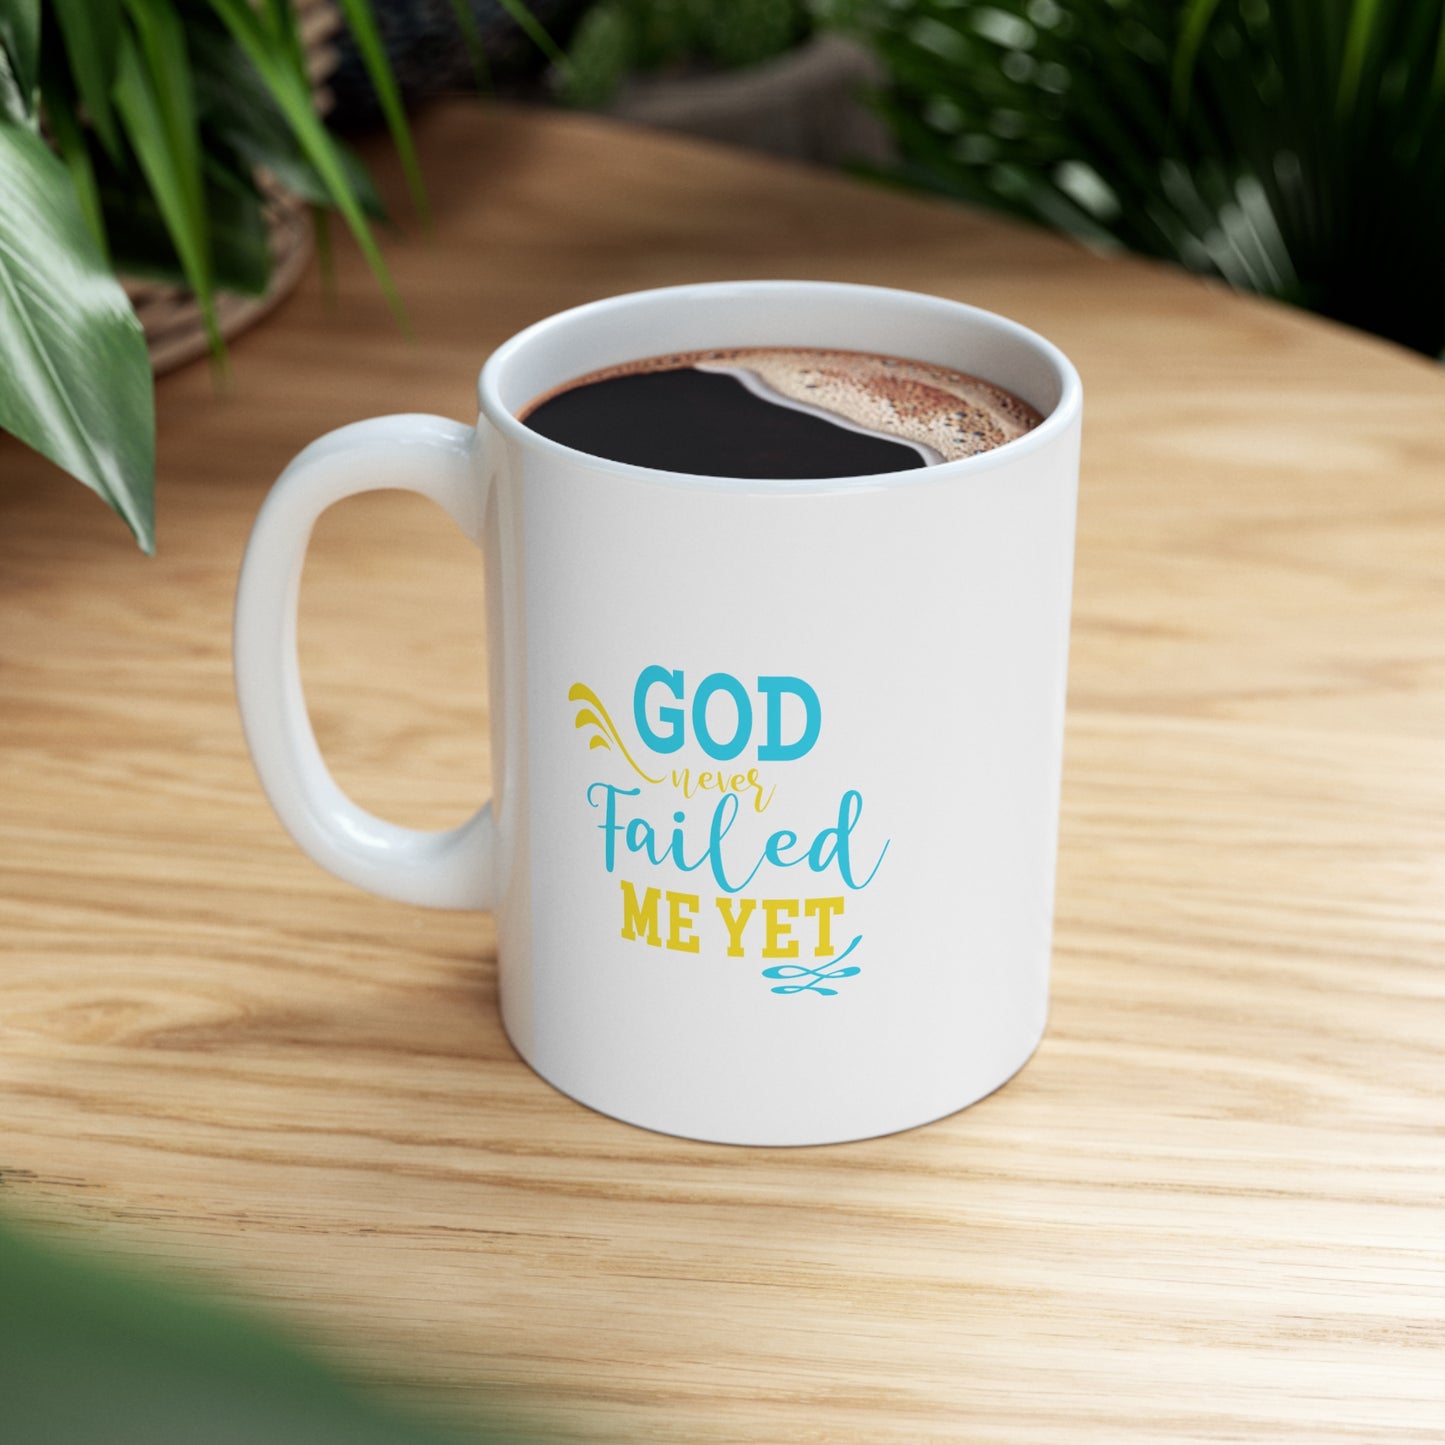 God Never Failed Me Yet Christian White Ceramic Mug 11oz (double sided print)